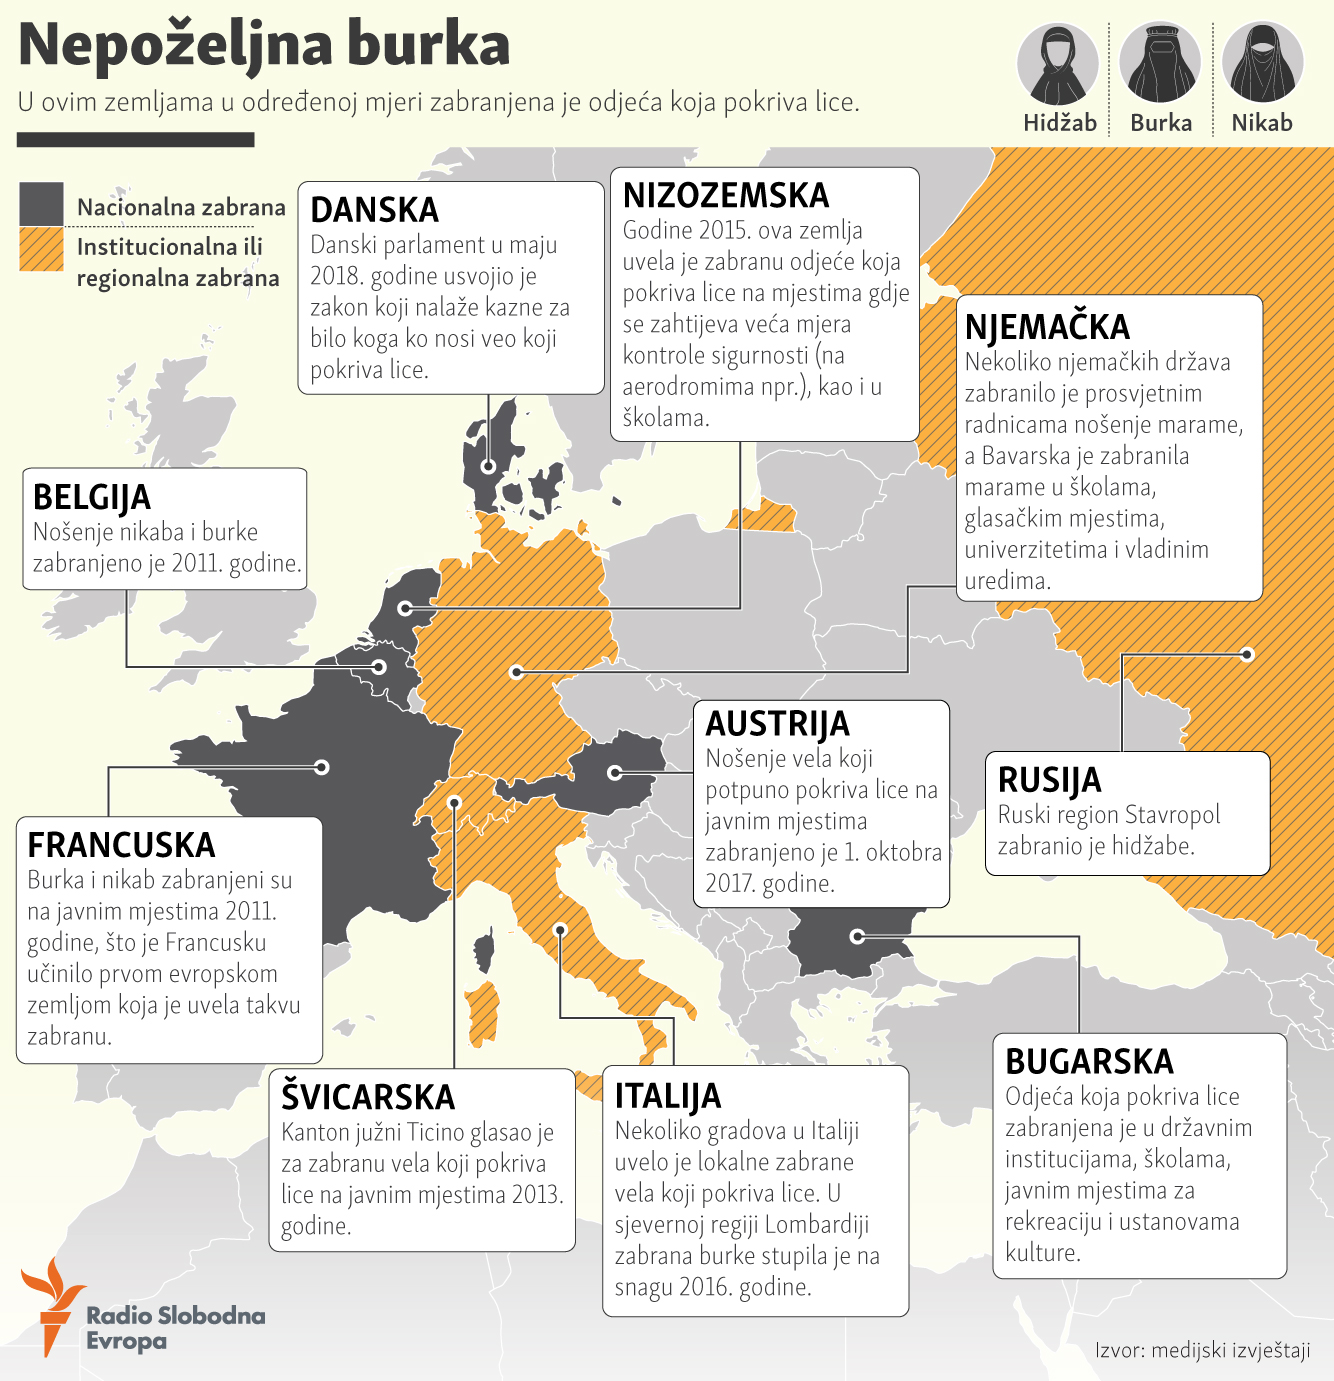 burqa in Europe-Balkan service translation